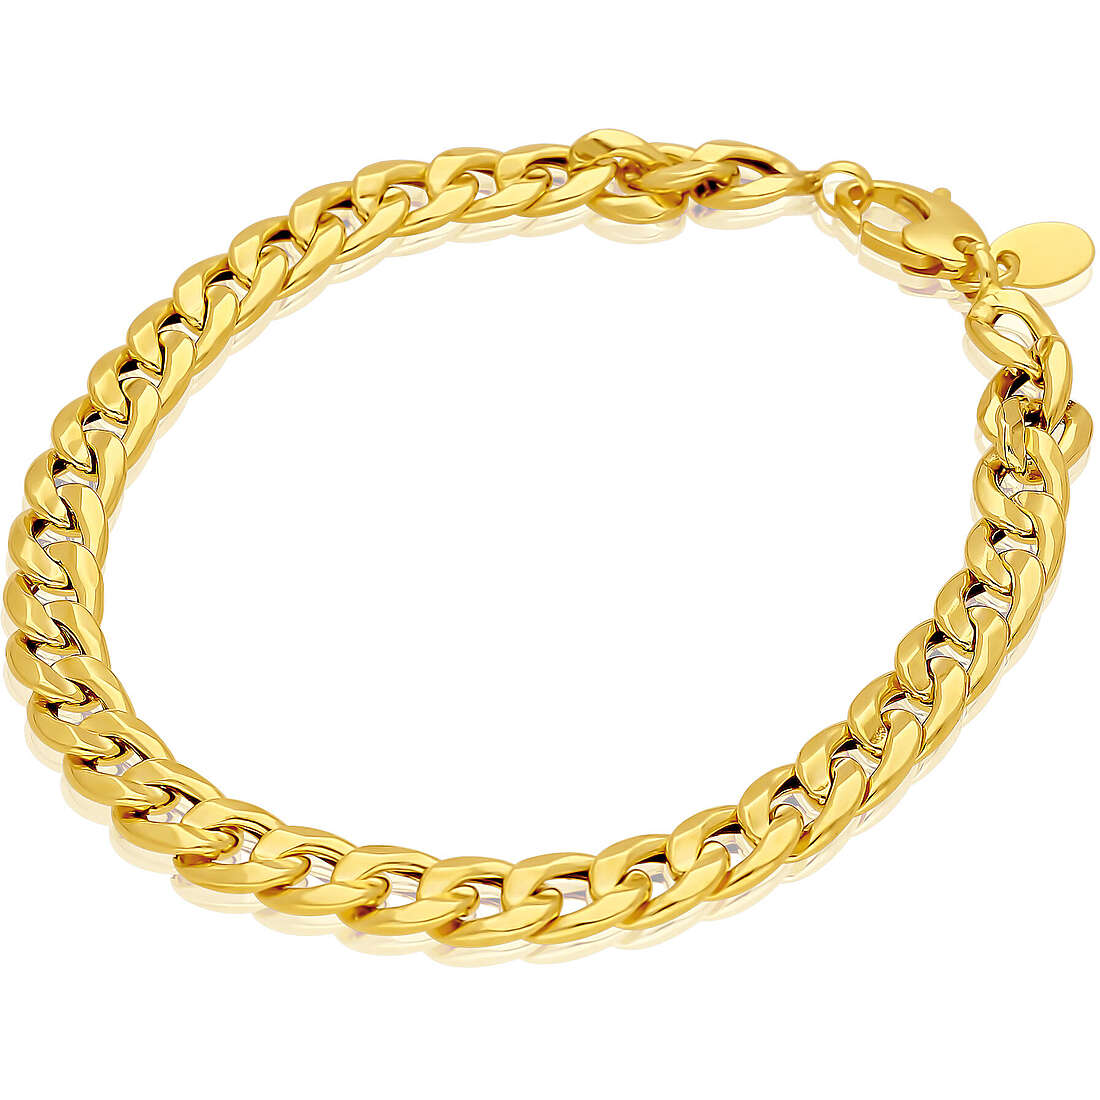 bracelet man Chain 18 kt Gold jewel GioiaPura Oro 750 GP-SVGT506GG19